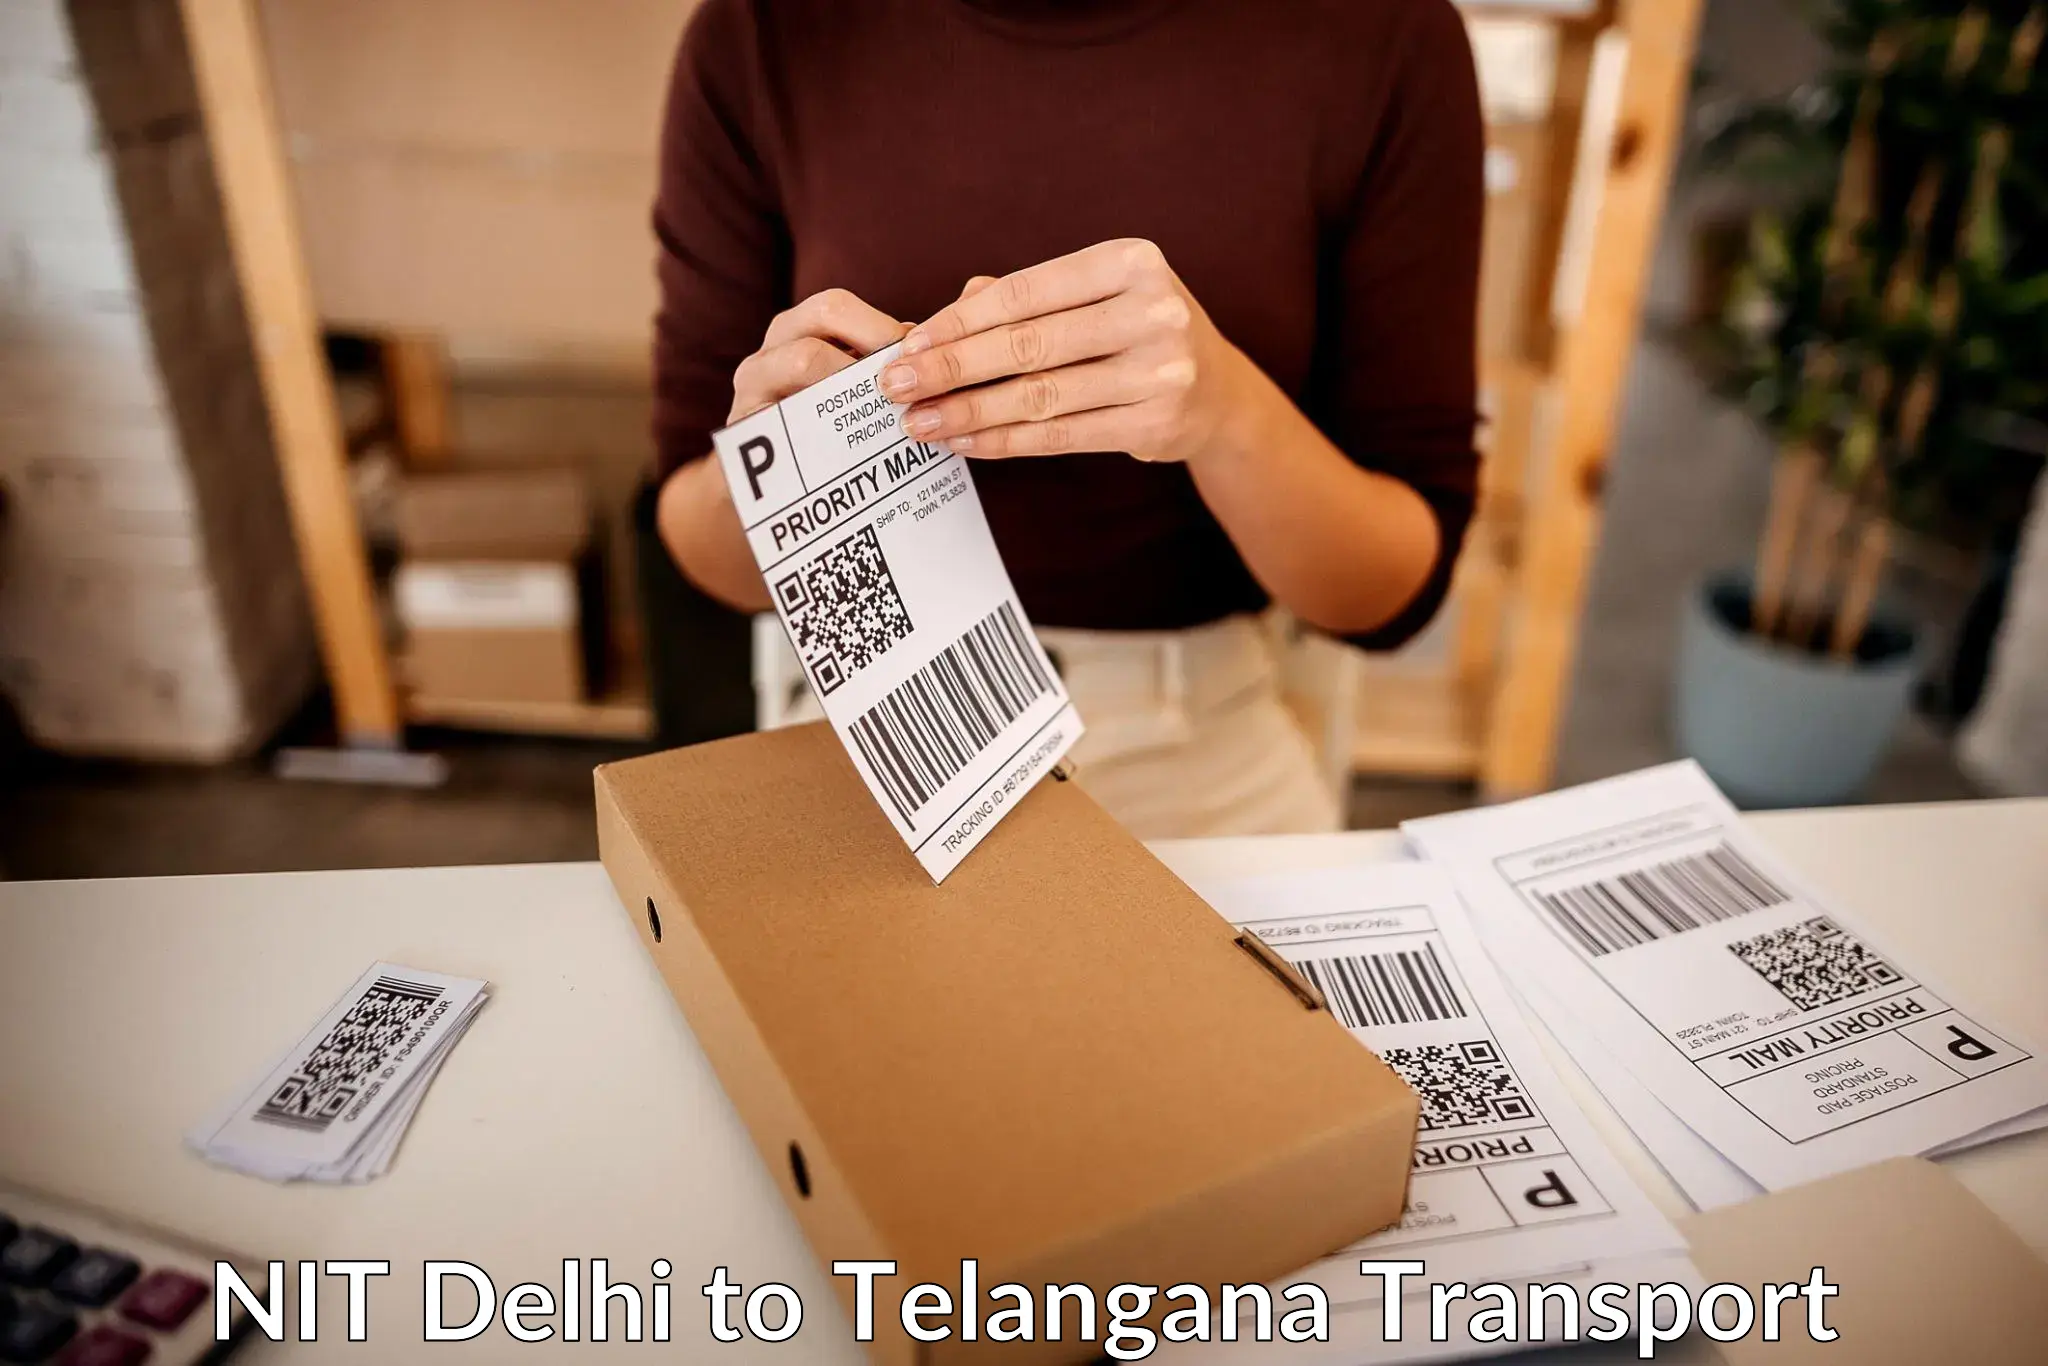 Delivery service NIT Delhi to Warangal